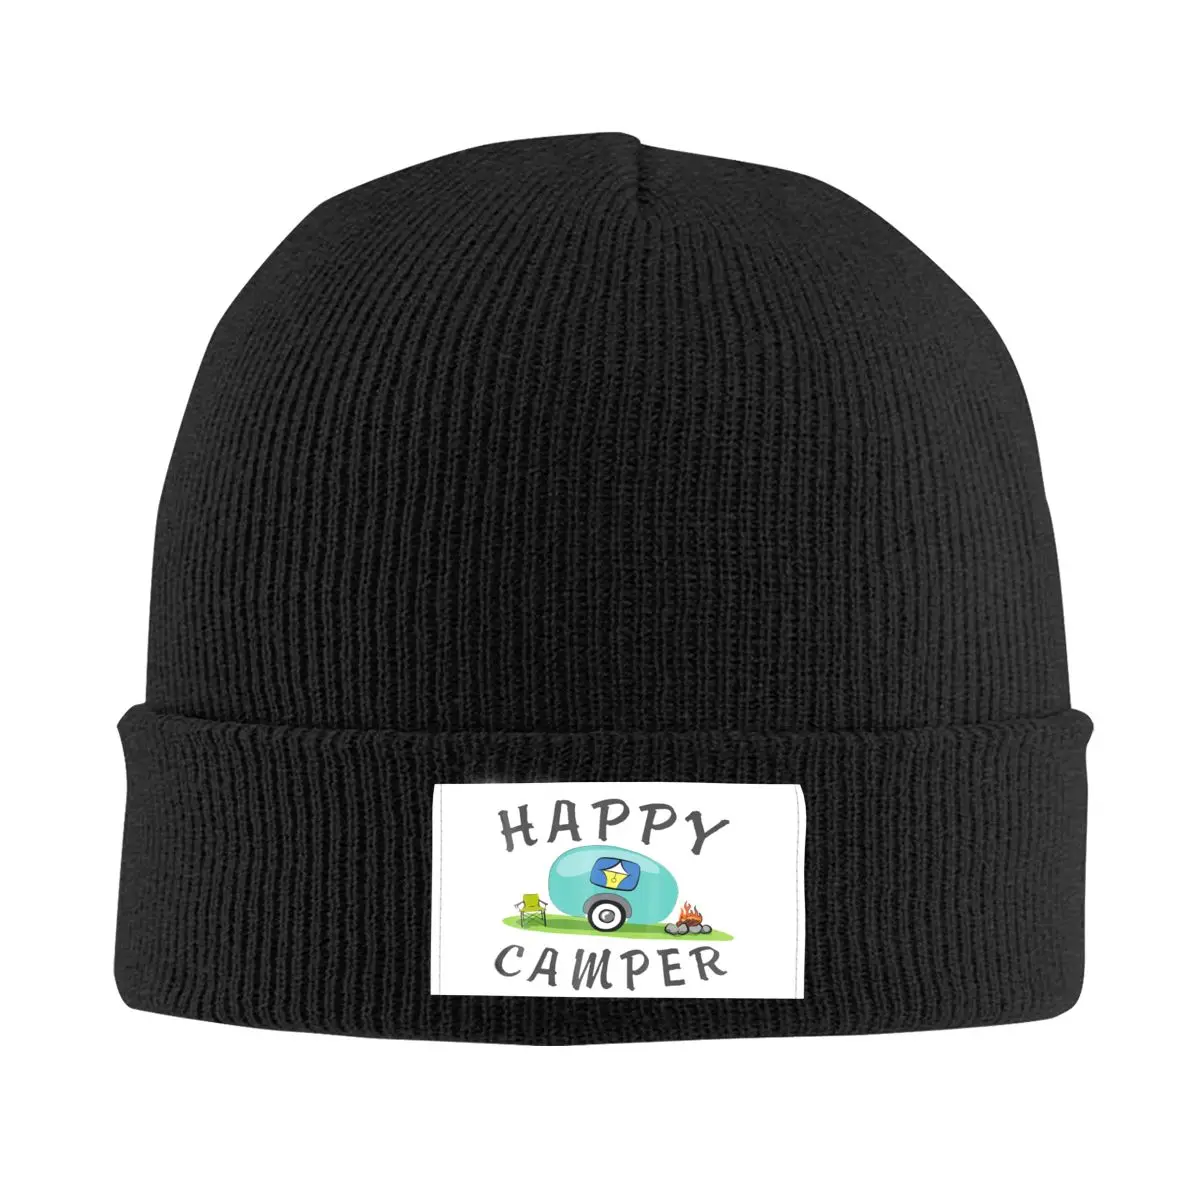 

Happy Camping Trailer Camper Skullies Beanies Caps Fashion Winter Warm Men Women Knit Hat Unisex Adult Bonnet Hats